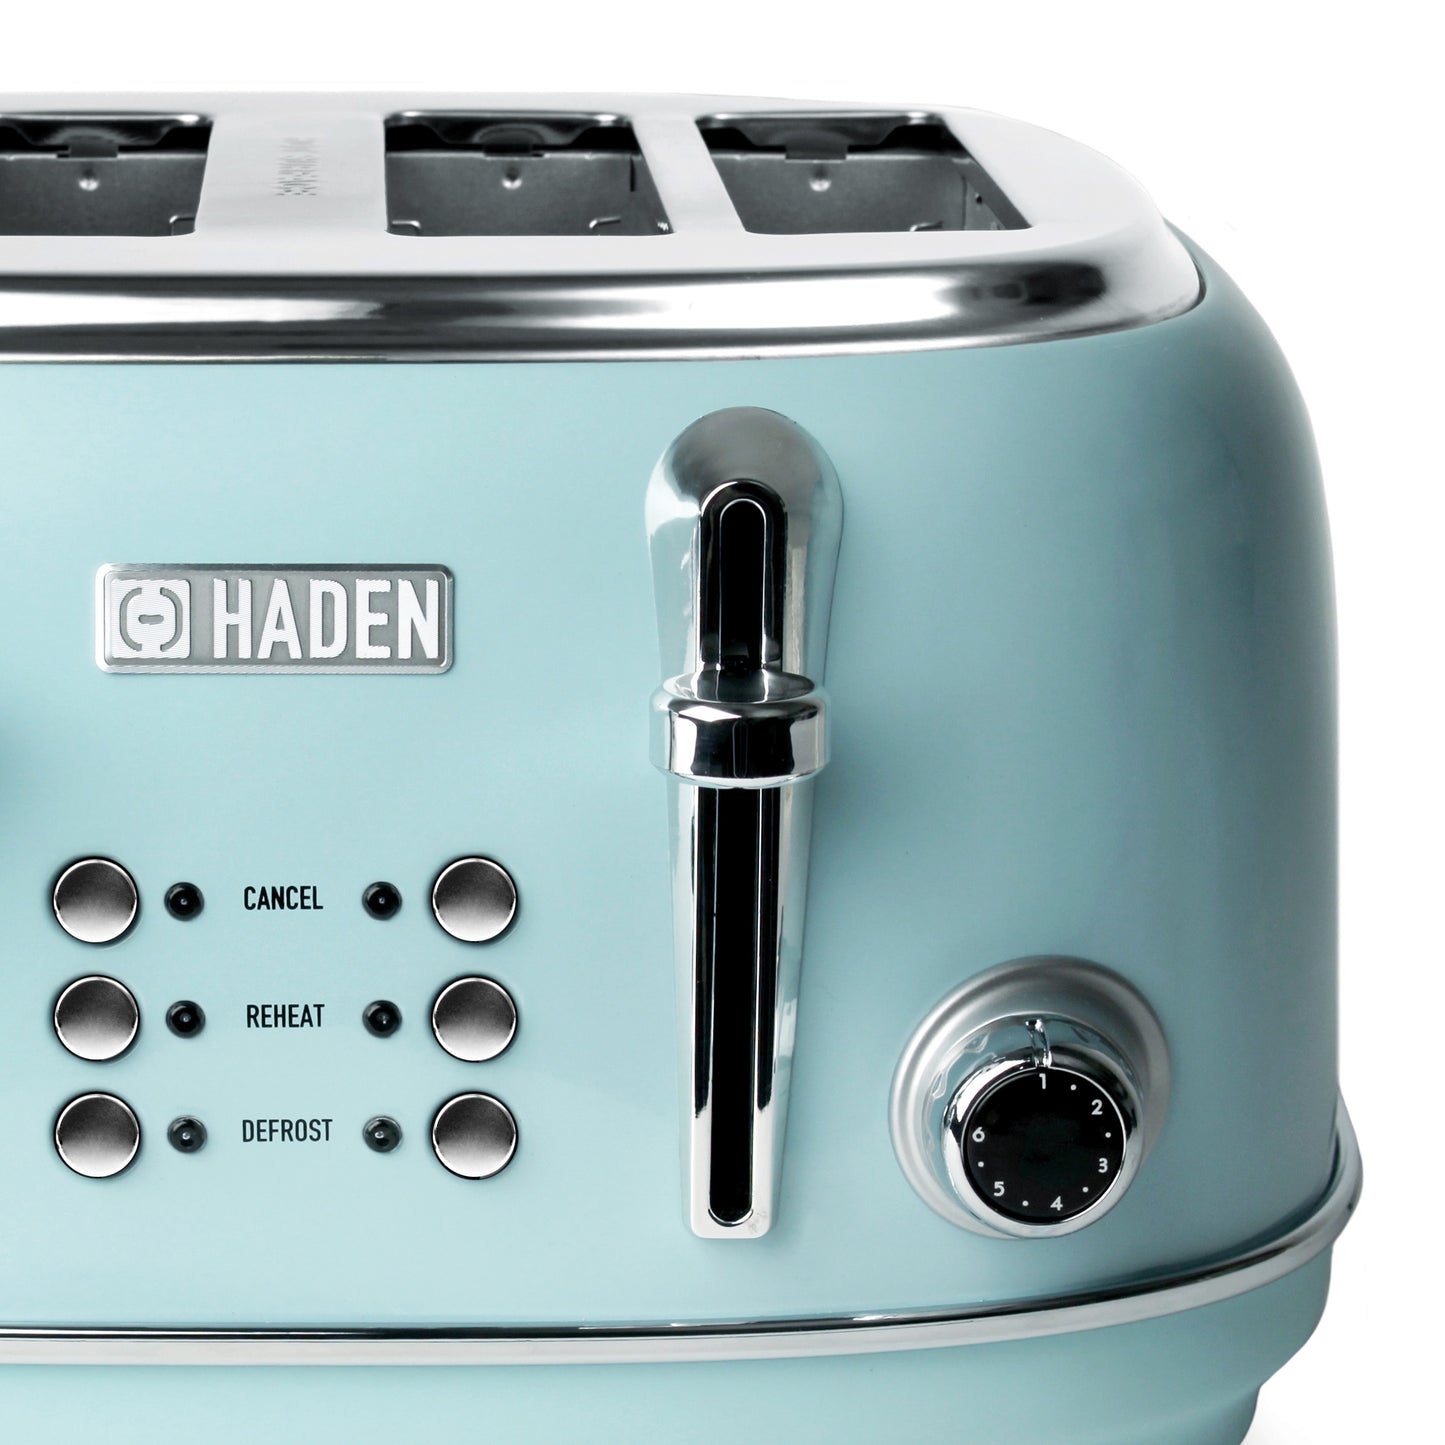 Haden Heritage Turquoise Bundle – Set of Kettle + 4 Slice Toaster